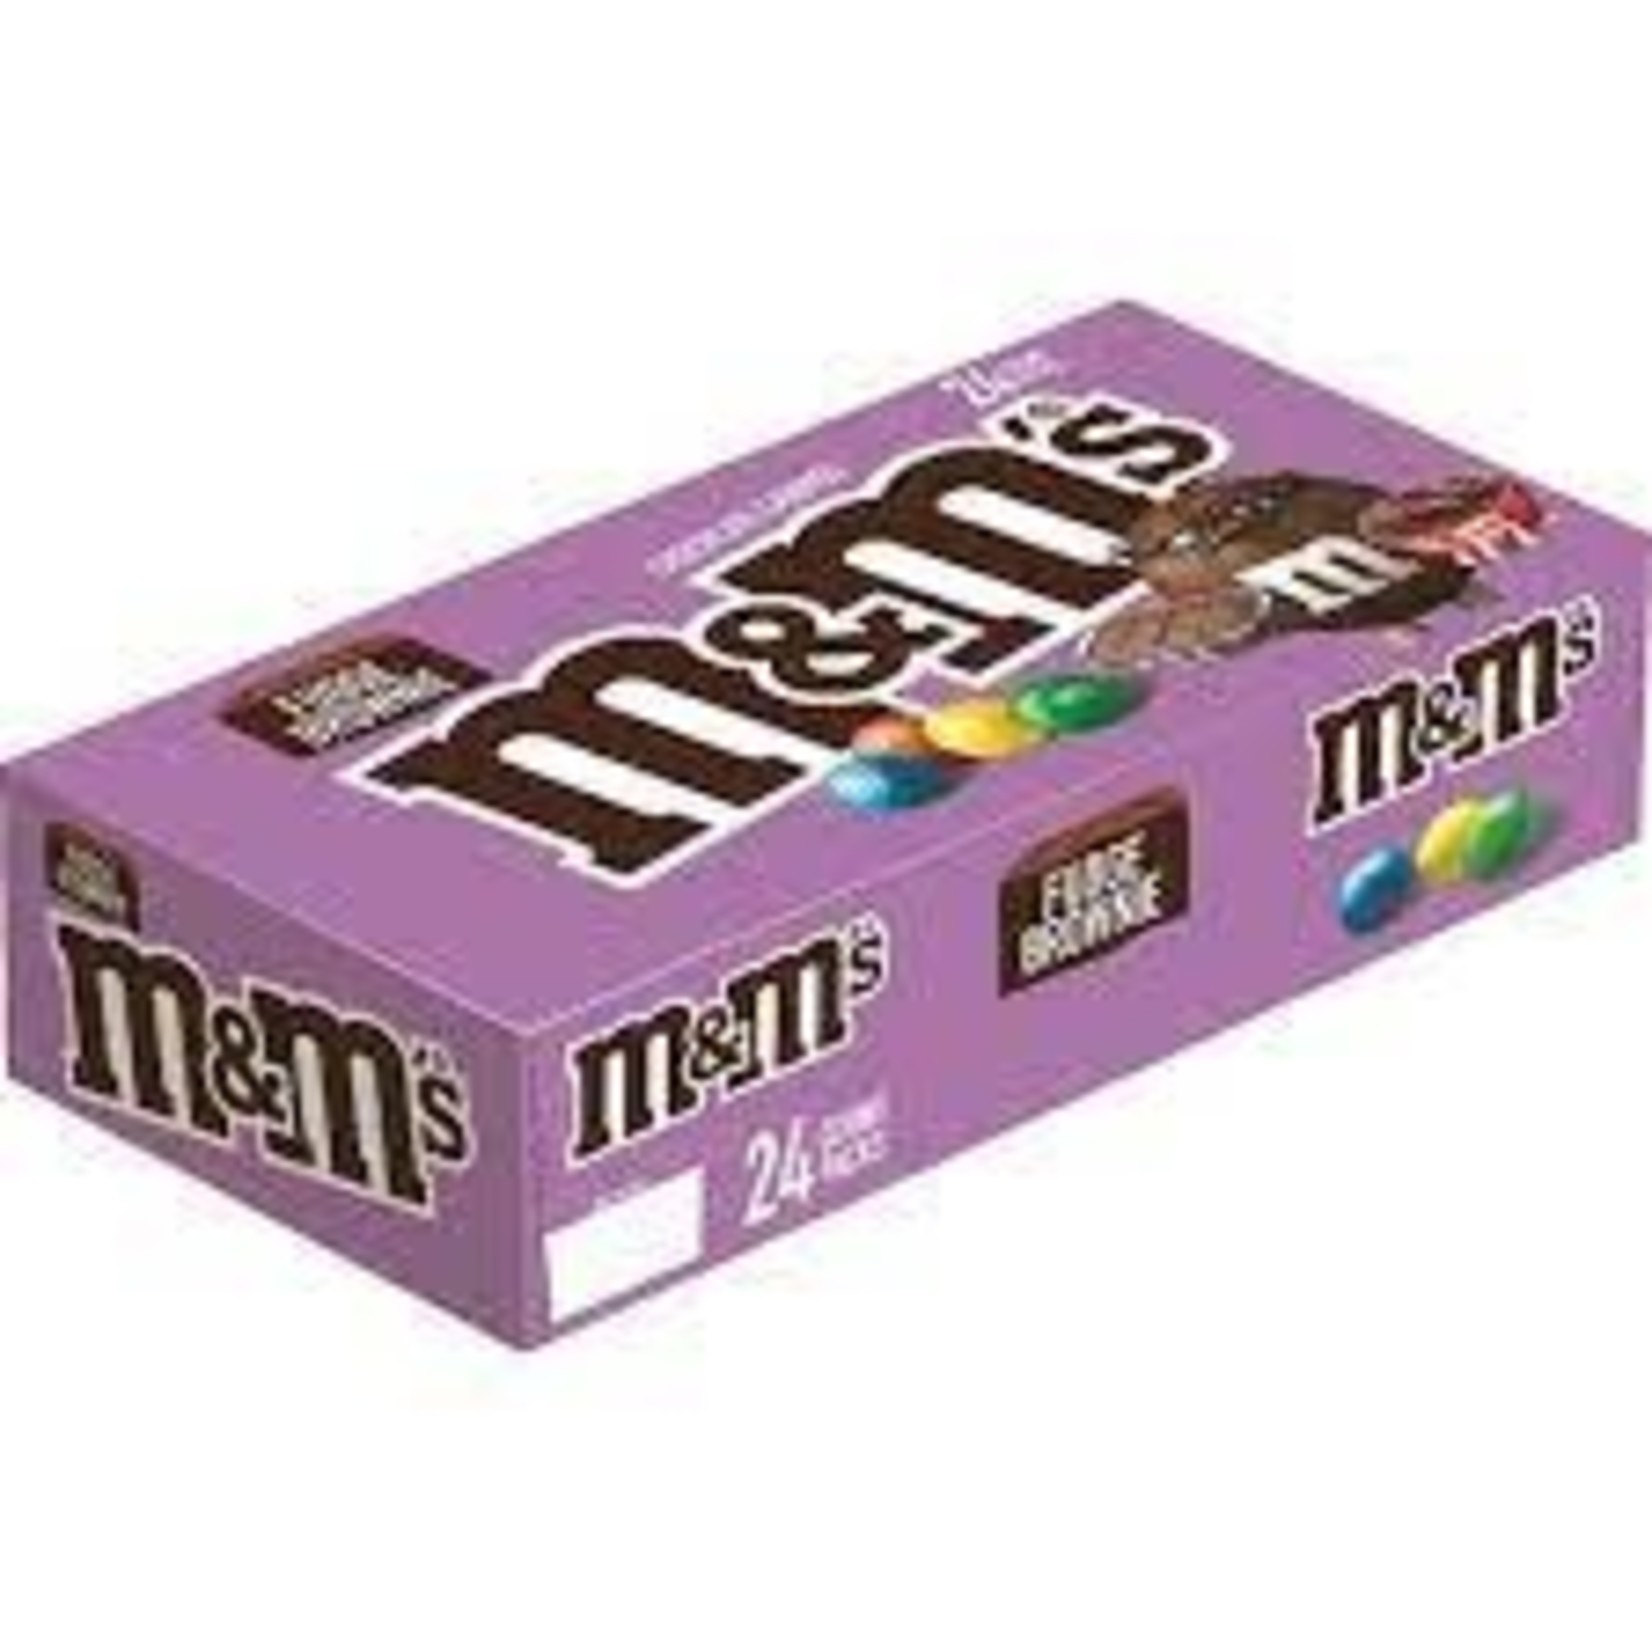 Mars M&Ms Fudge Brownie Share Size 24ct